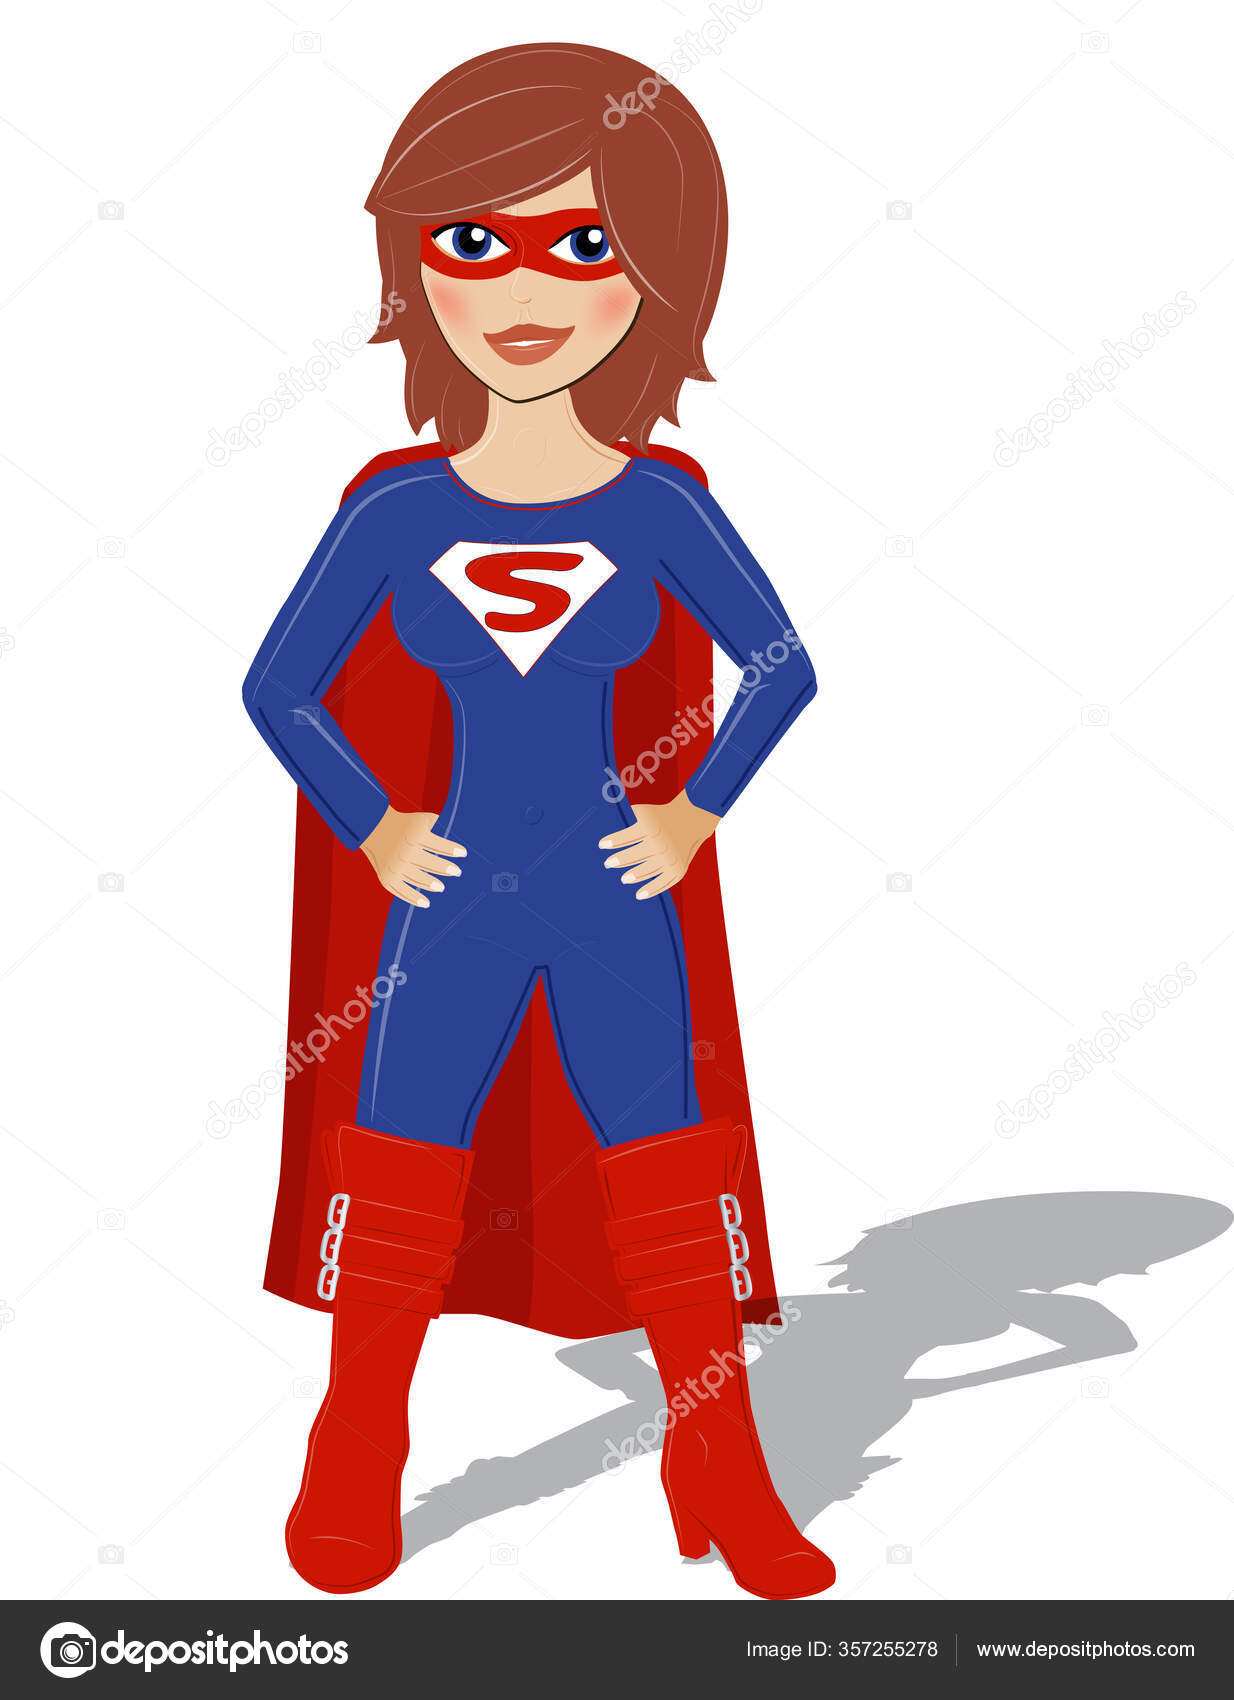 Supergirl volando imágenes de stock de arte vectorial | Depositphotos